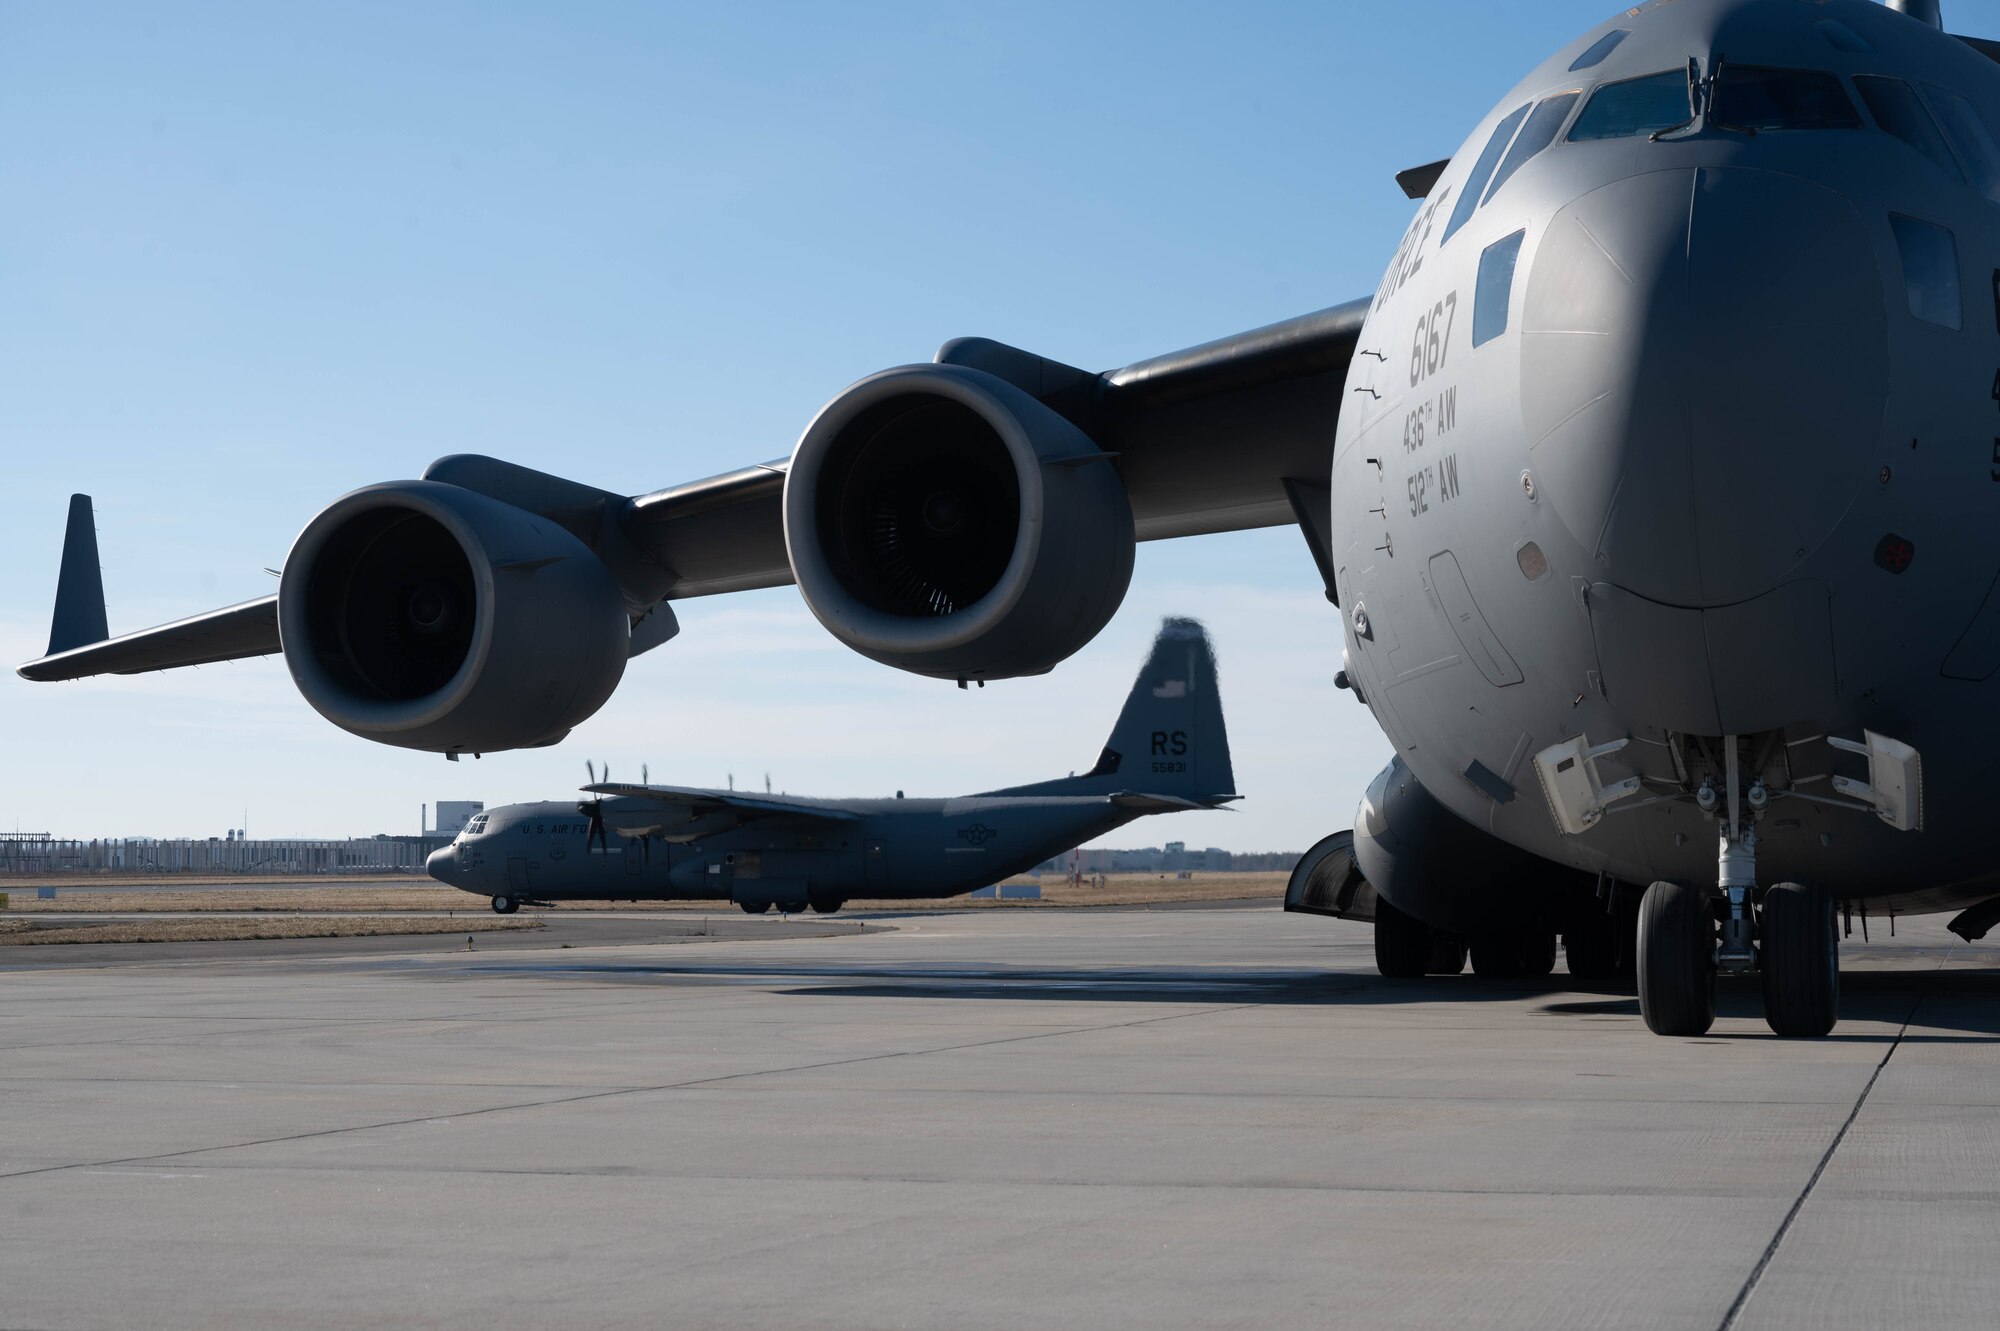 A  C-130J Super Hercules aircraft taxis onto the runway.